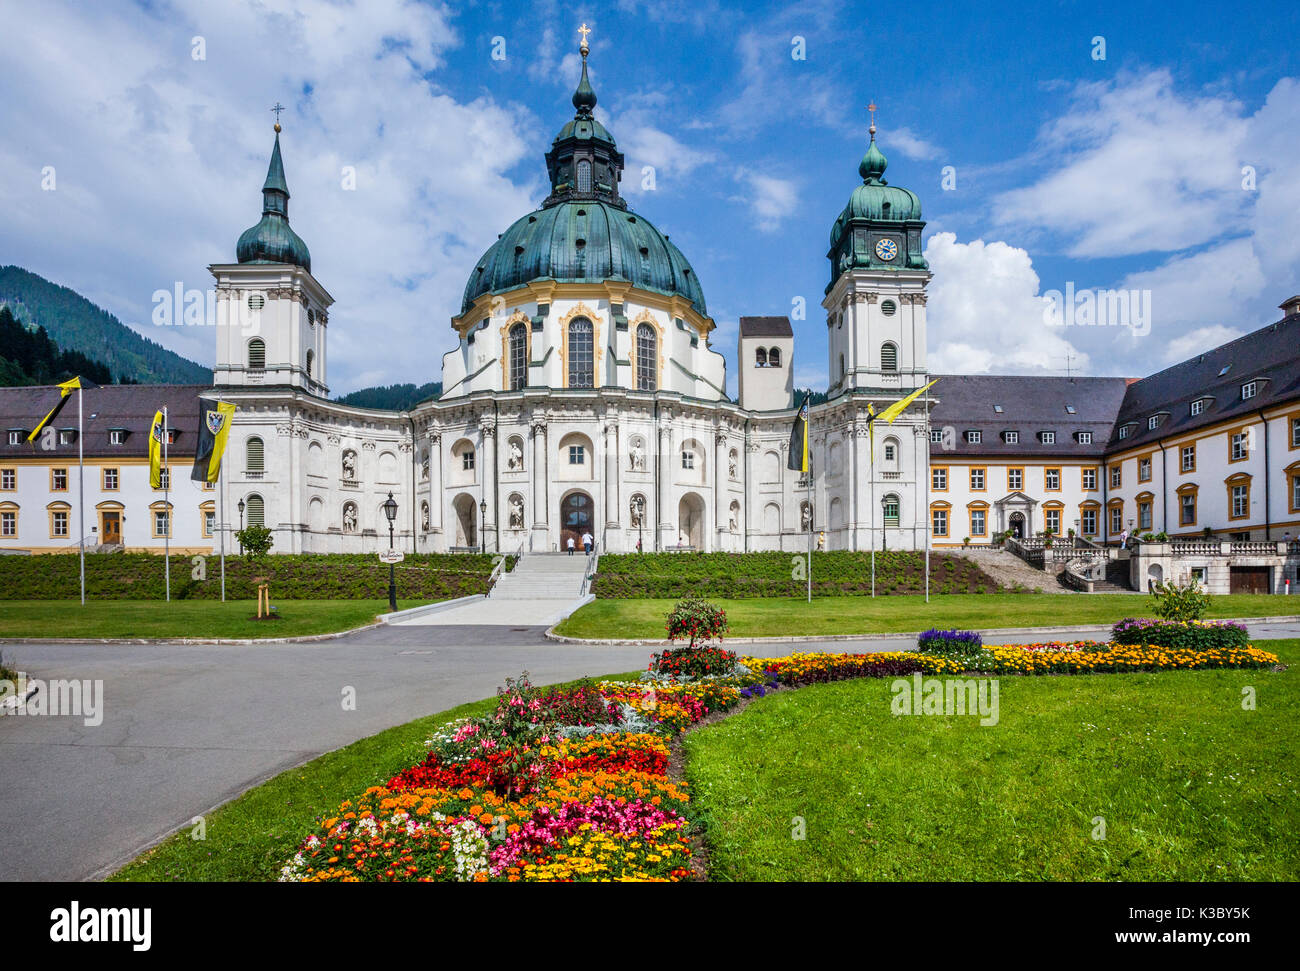 Germany, Bavaria, Ettal Benedictine monastery, view of the Ettal Abbey baroque church facade Stock Photo